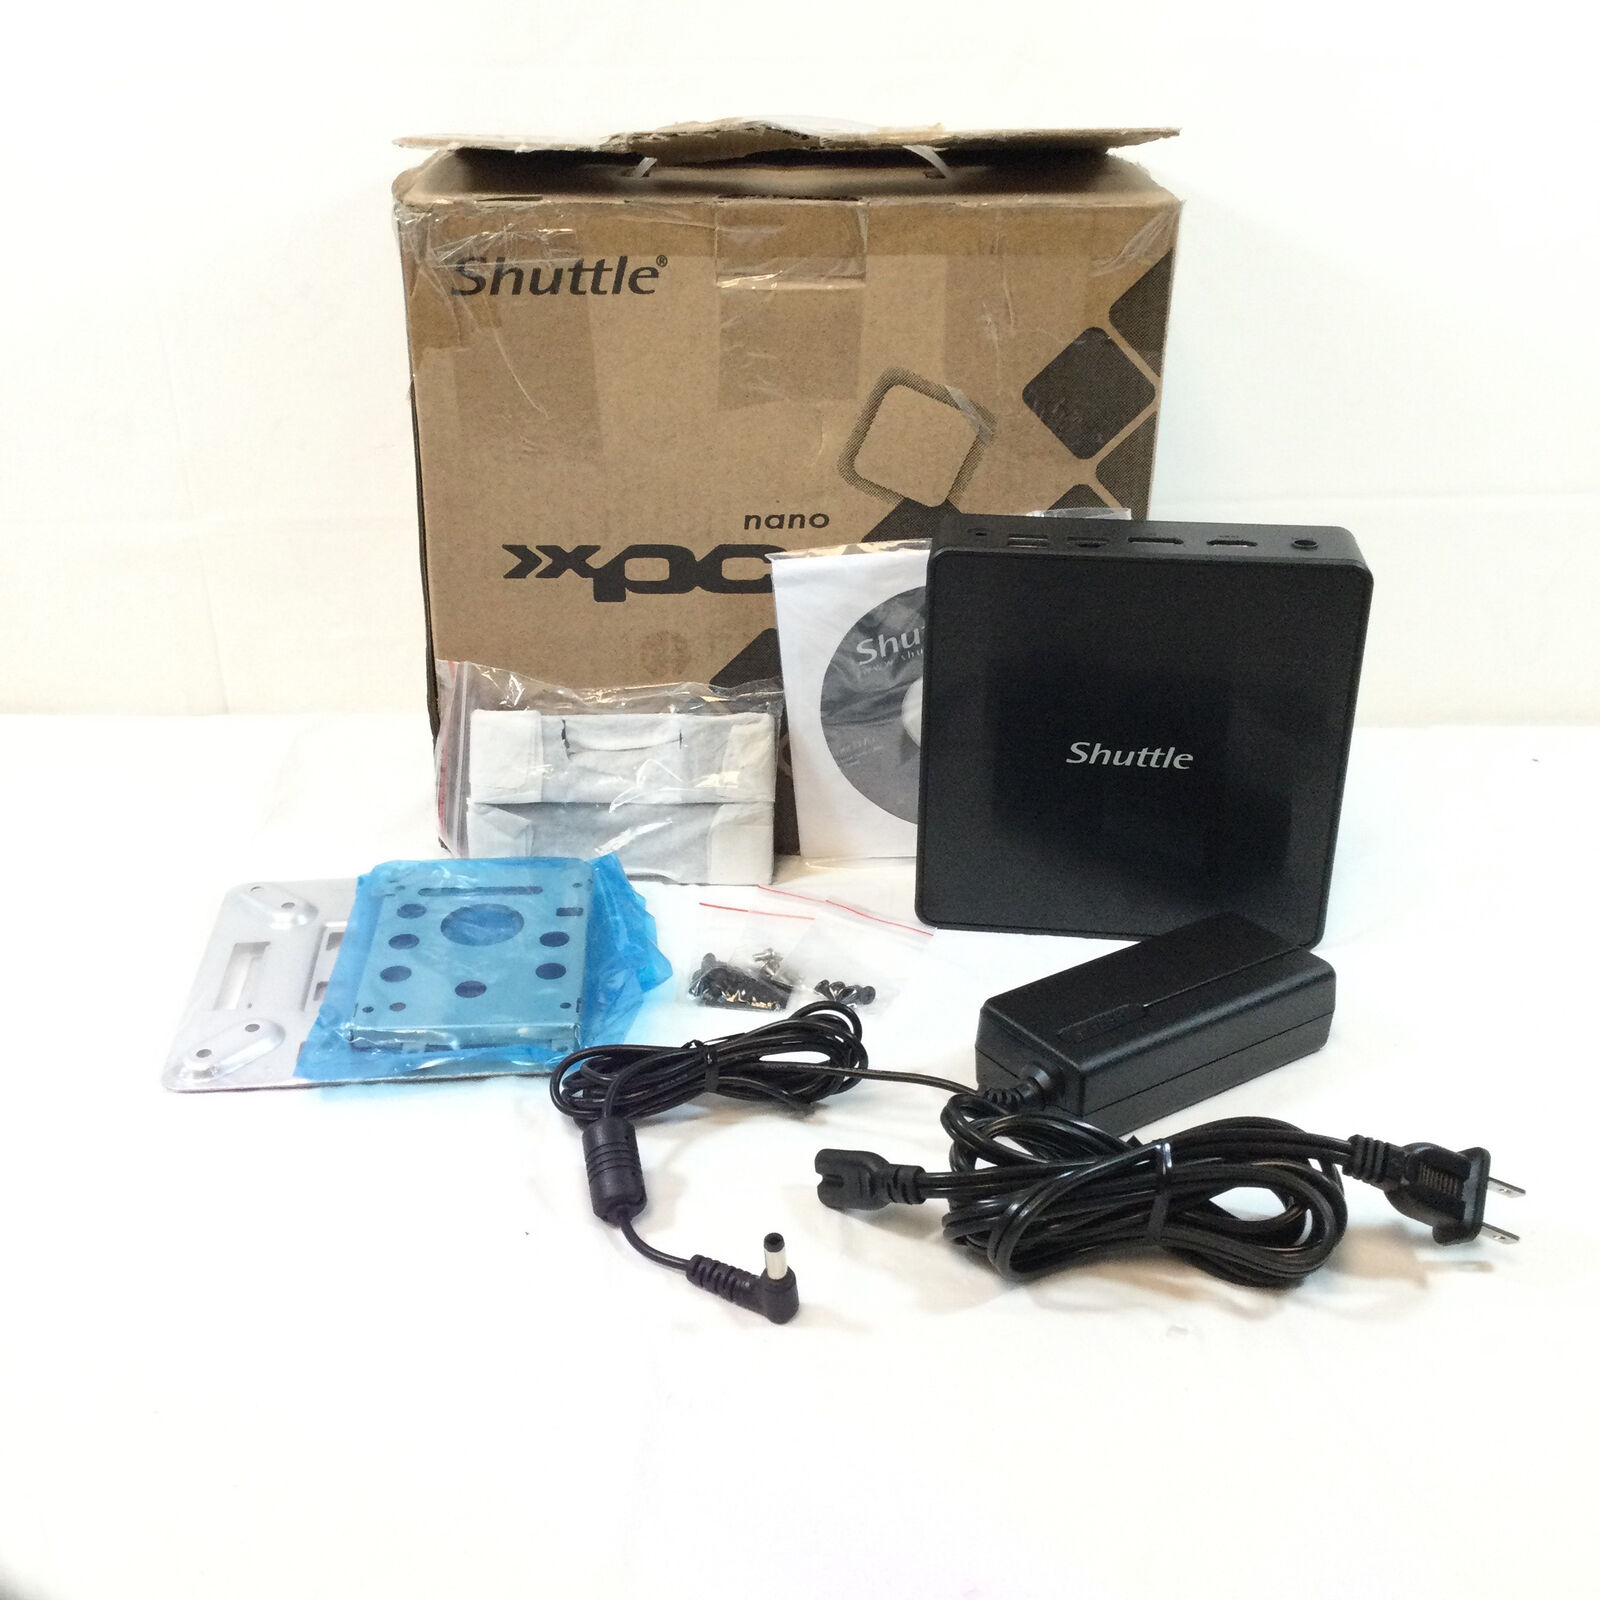 Shuttle XPC Nano NC02U Black Portable 4K Dual Channel Mini PC Used